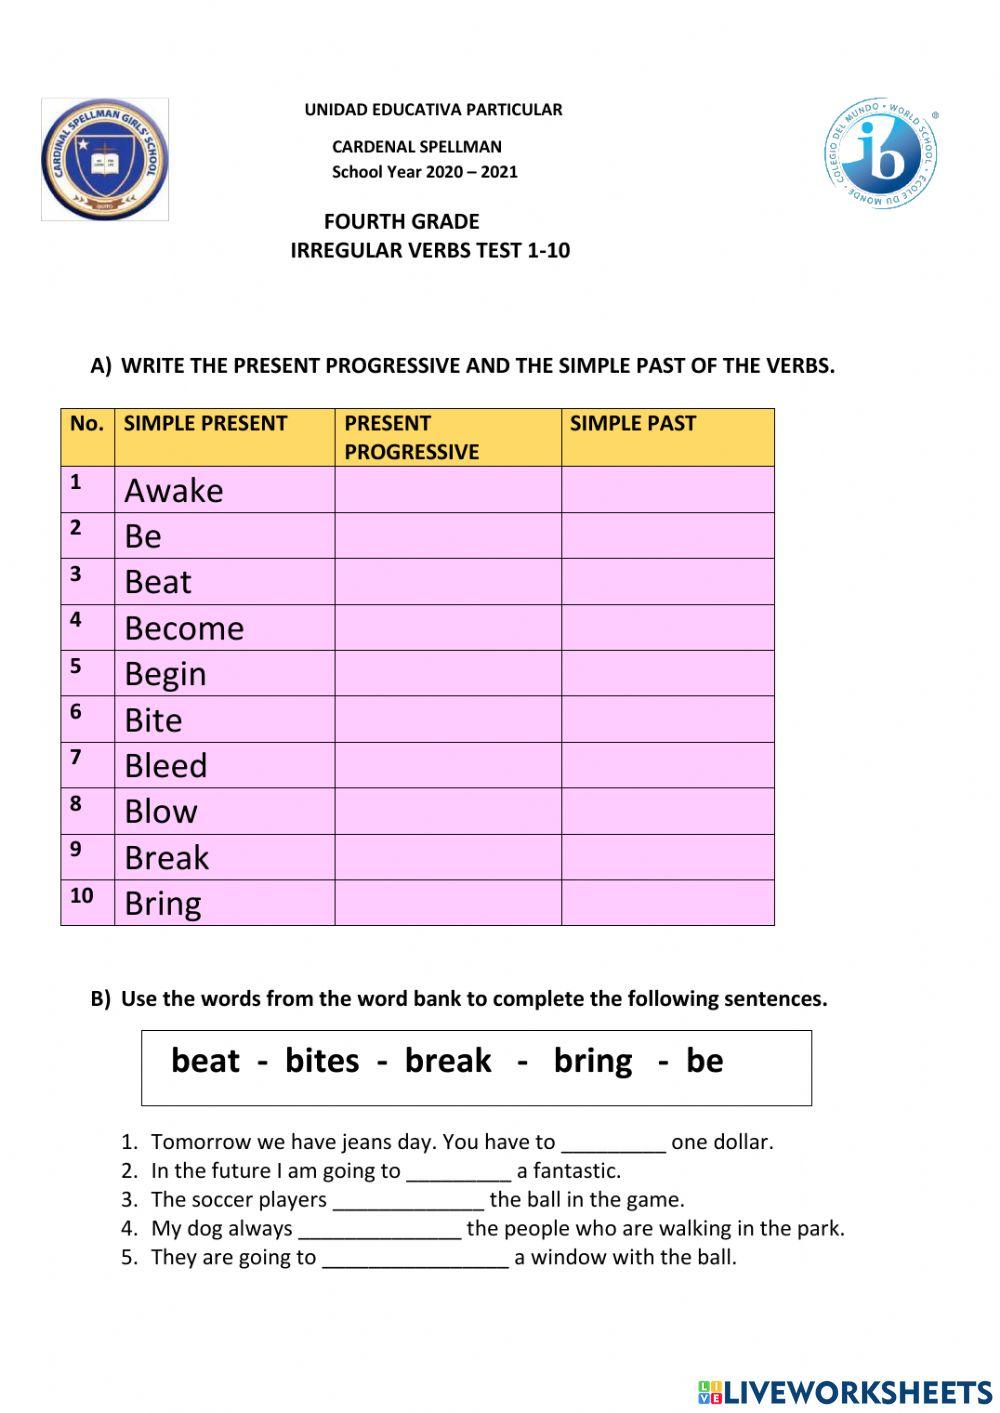 Irregular verbs test 1-10